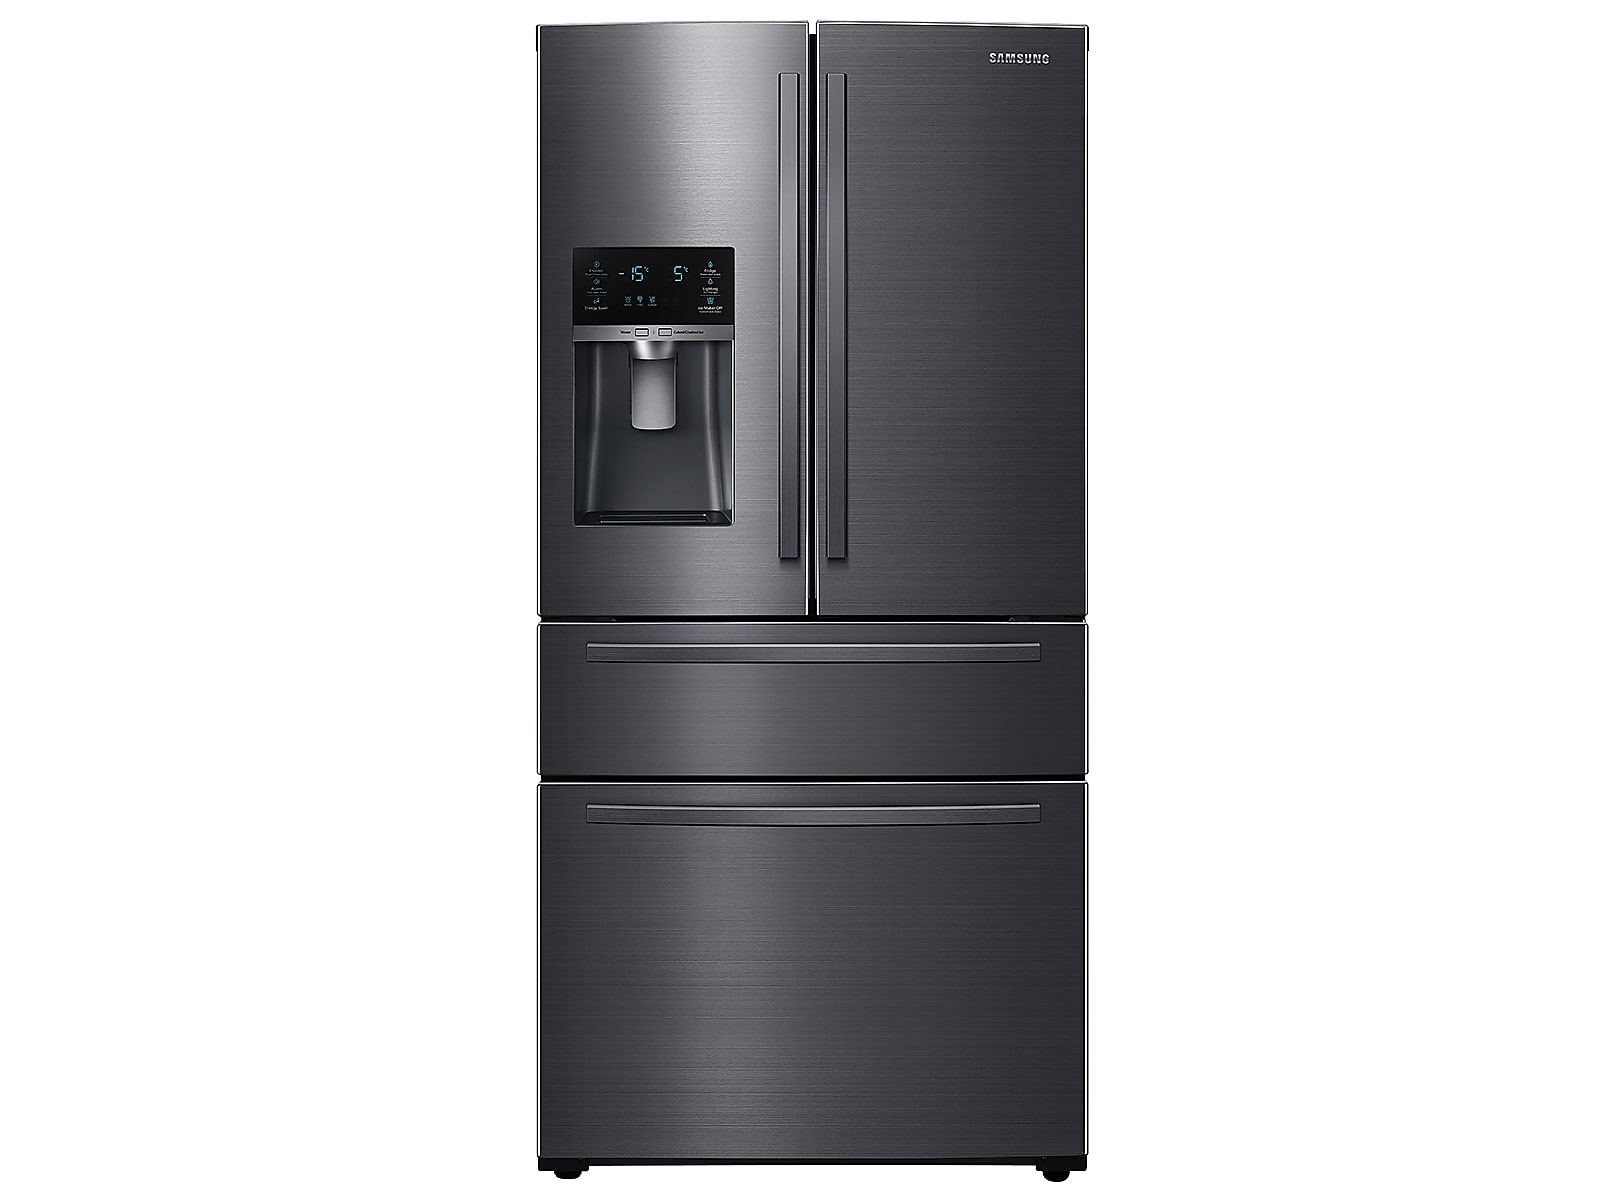 Samsung 25 cu. ft. Large Capacity 4-Door French Door Refrigerator with External Water & Ice Dispenser in Black Stainless Steel(RF25HMIDBSG/AA)